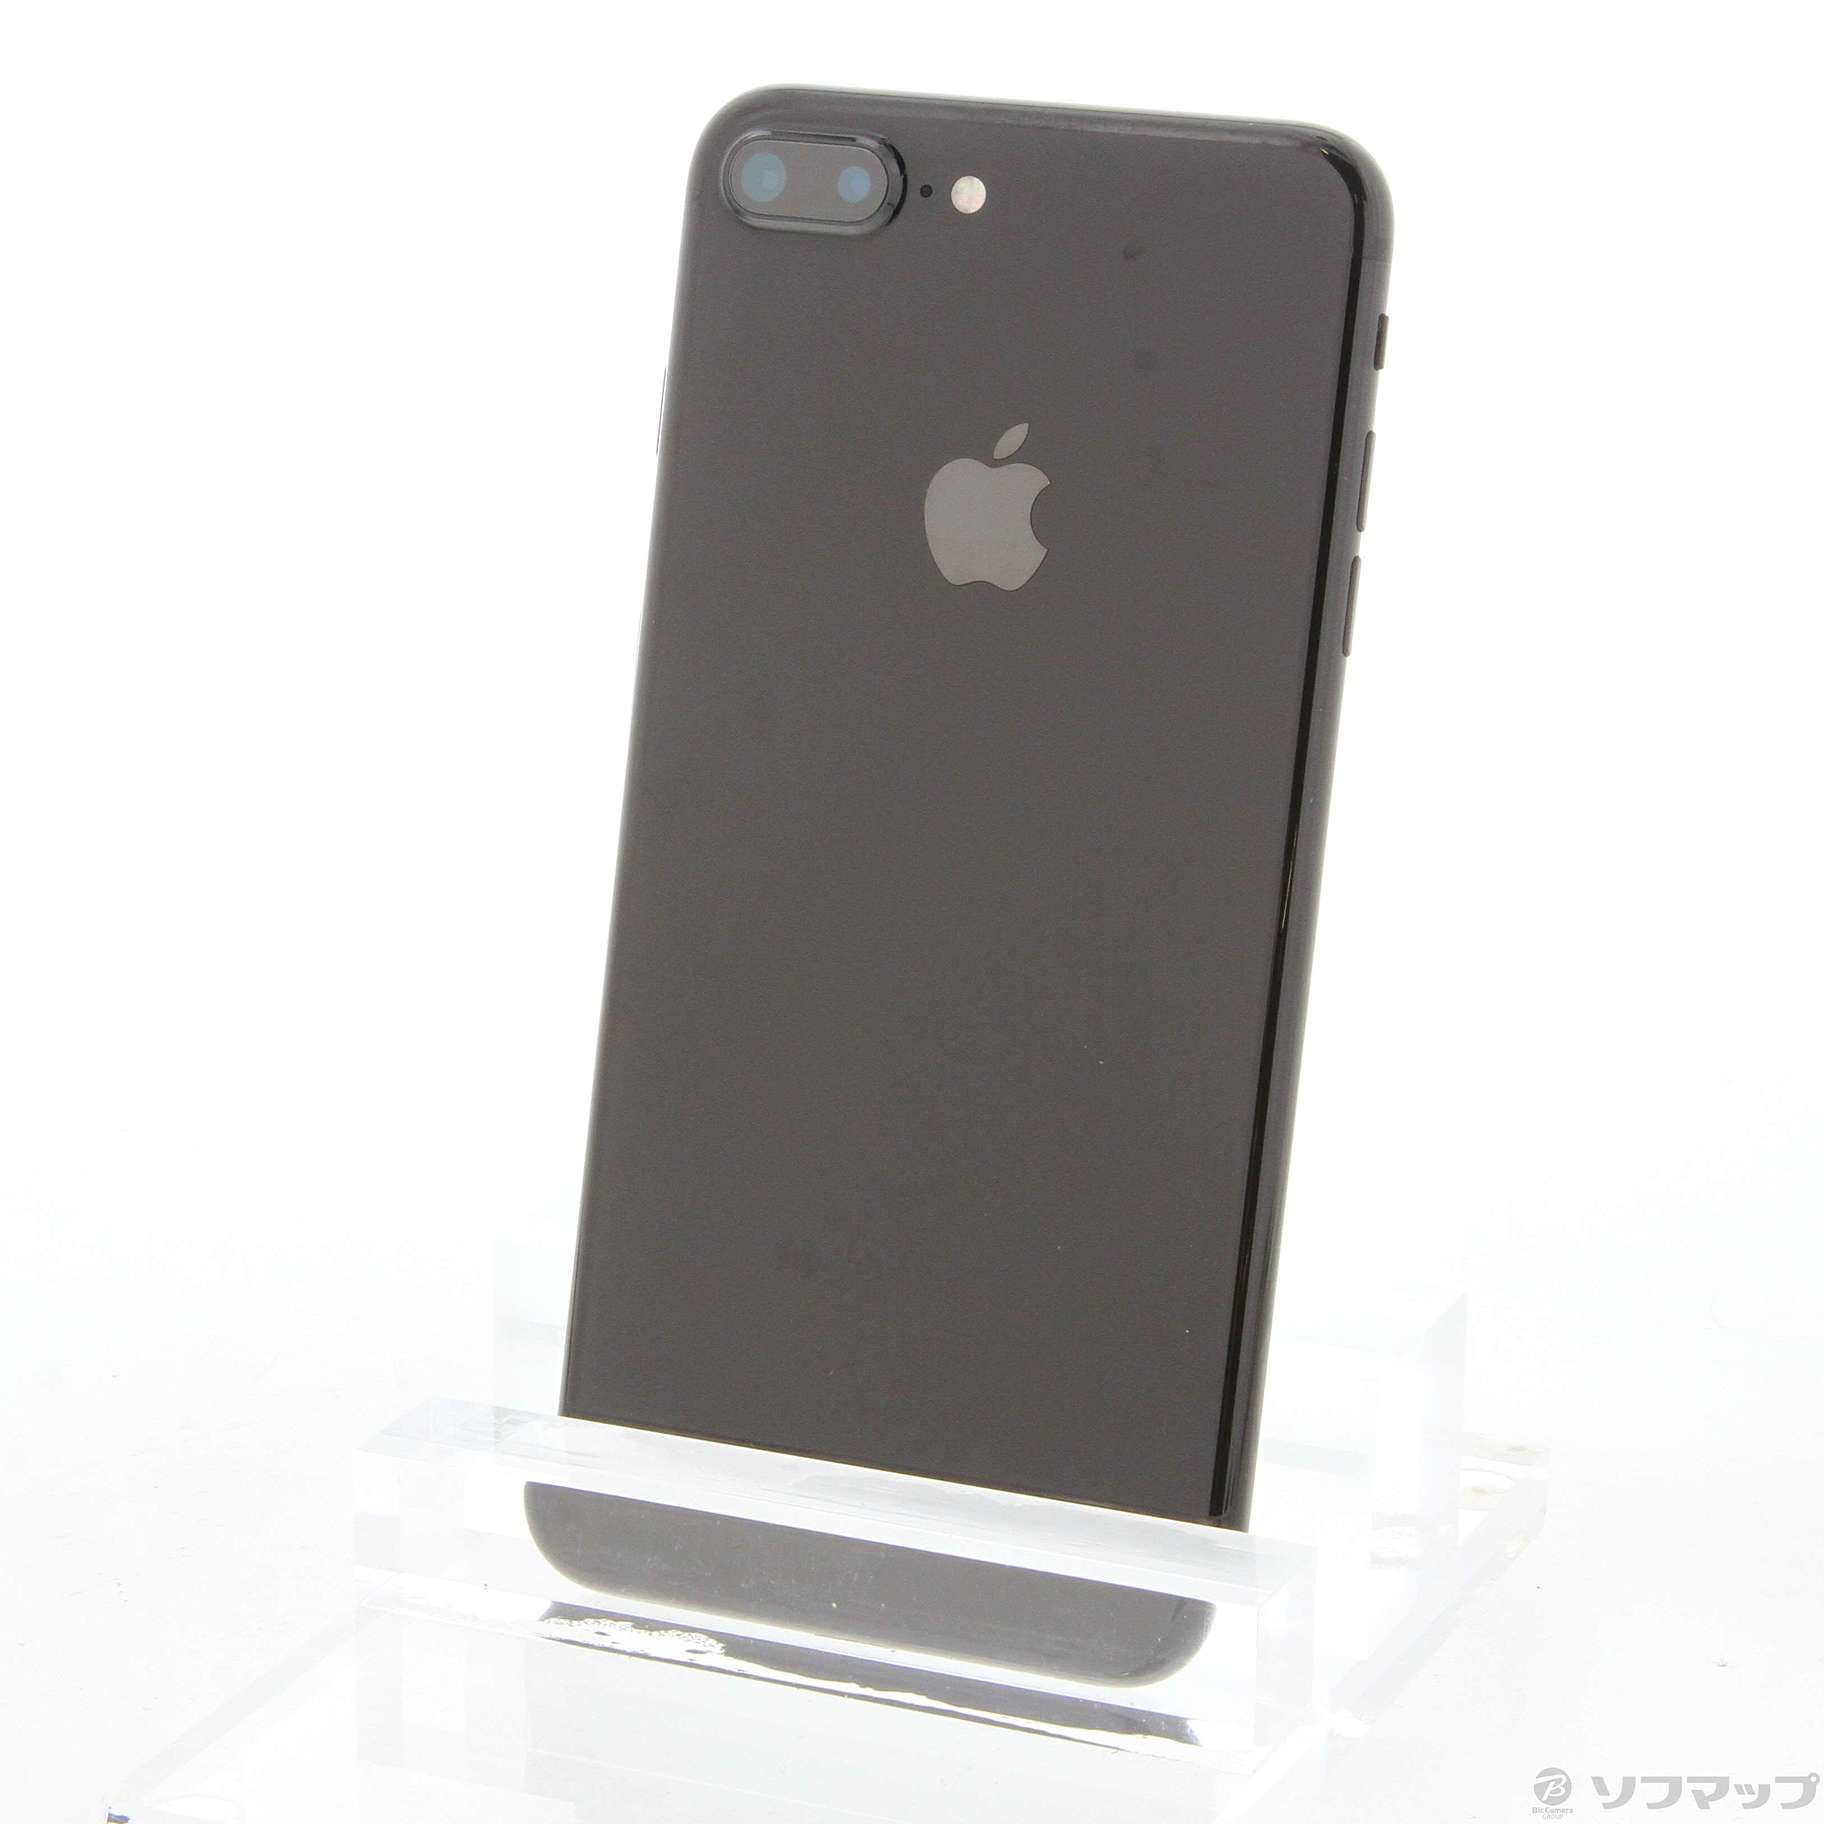 iPhone7 Plus Jet Black 128GB SIMフリー